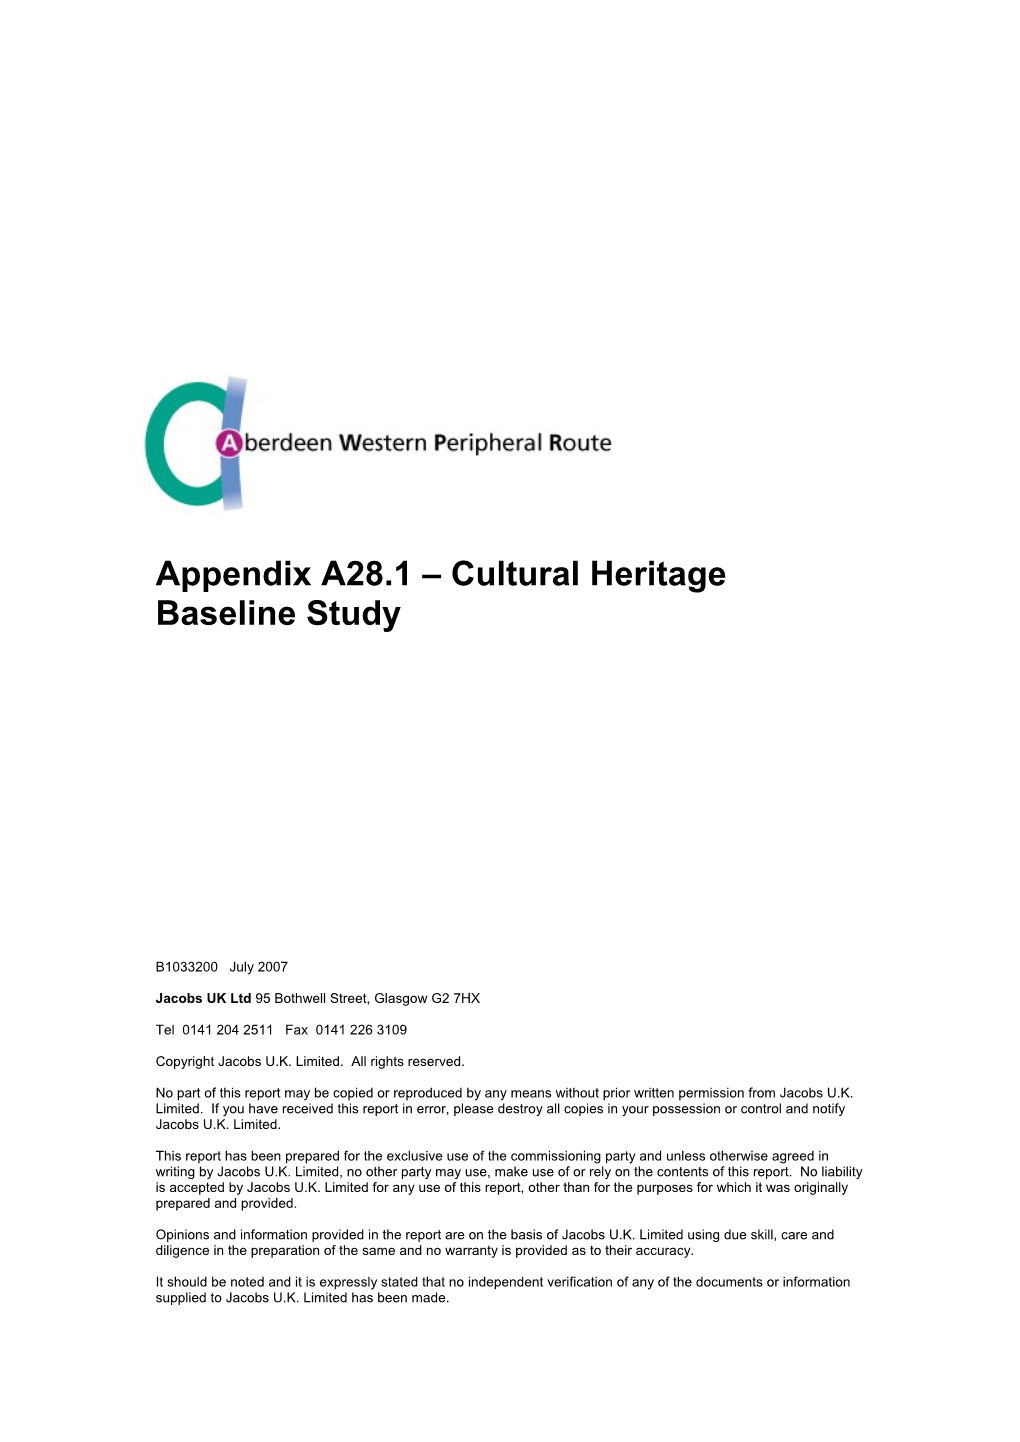 Appendix A28.1 – Cultural Heritage Baseline Study